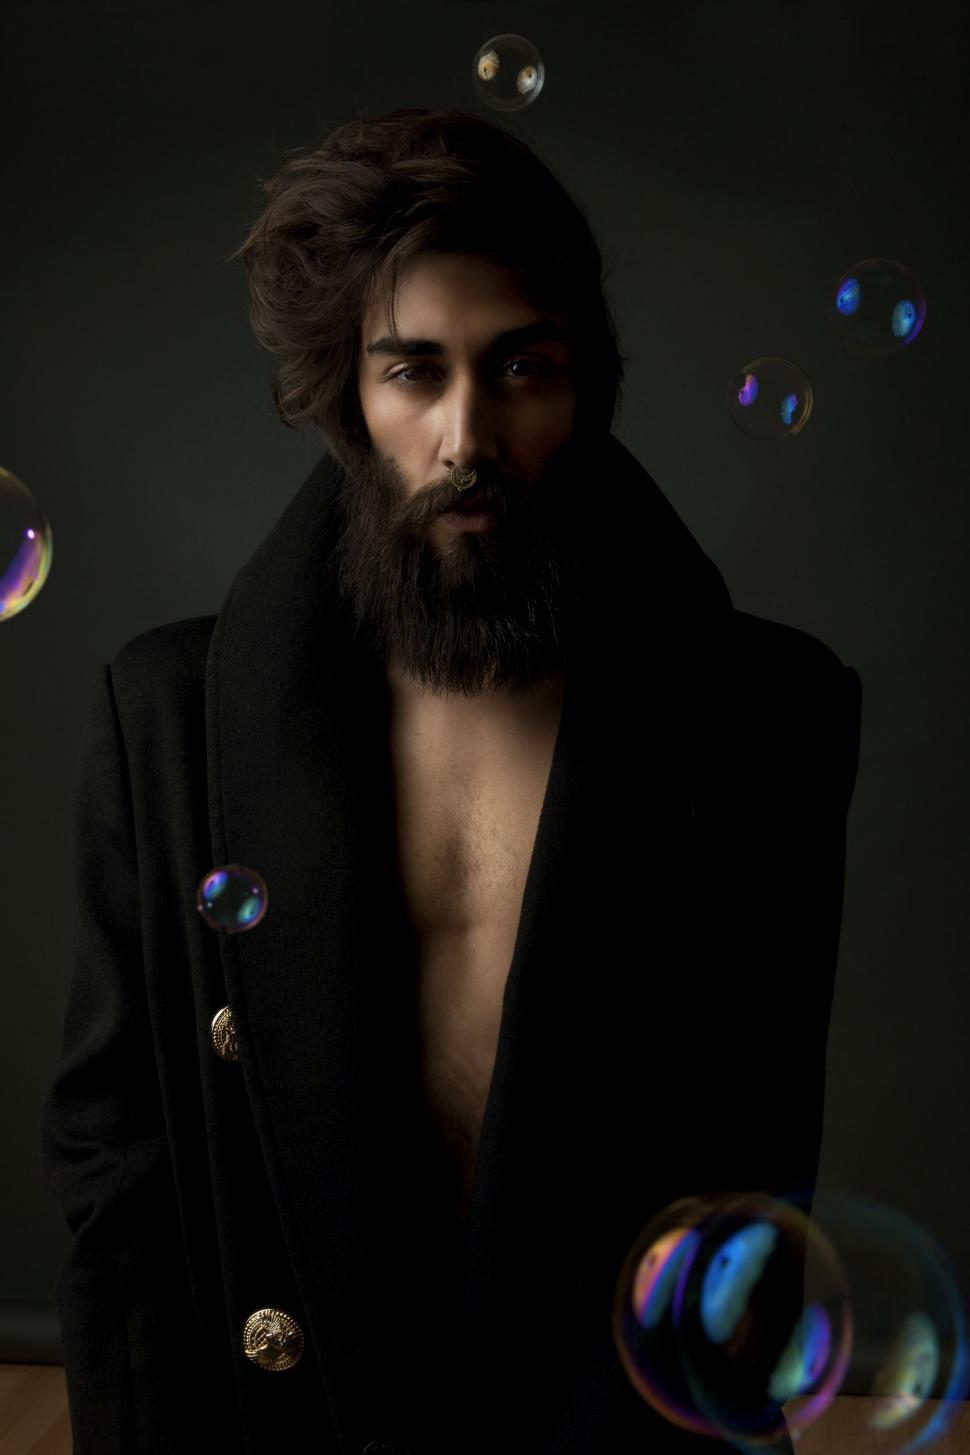 Free Image of Bearded Man in Black Coat 